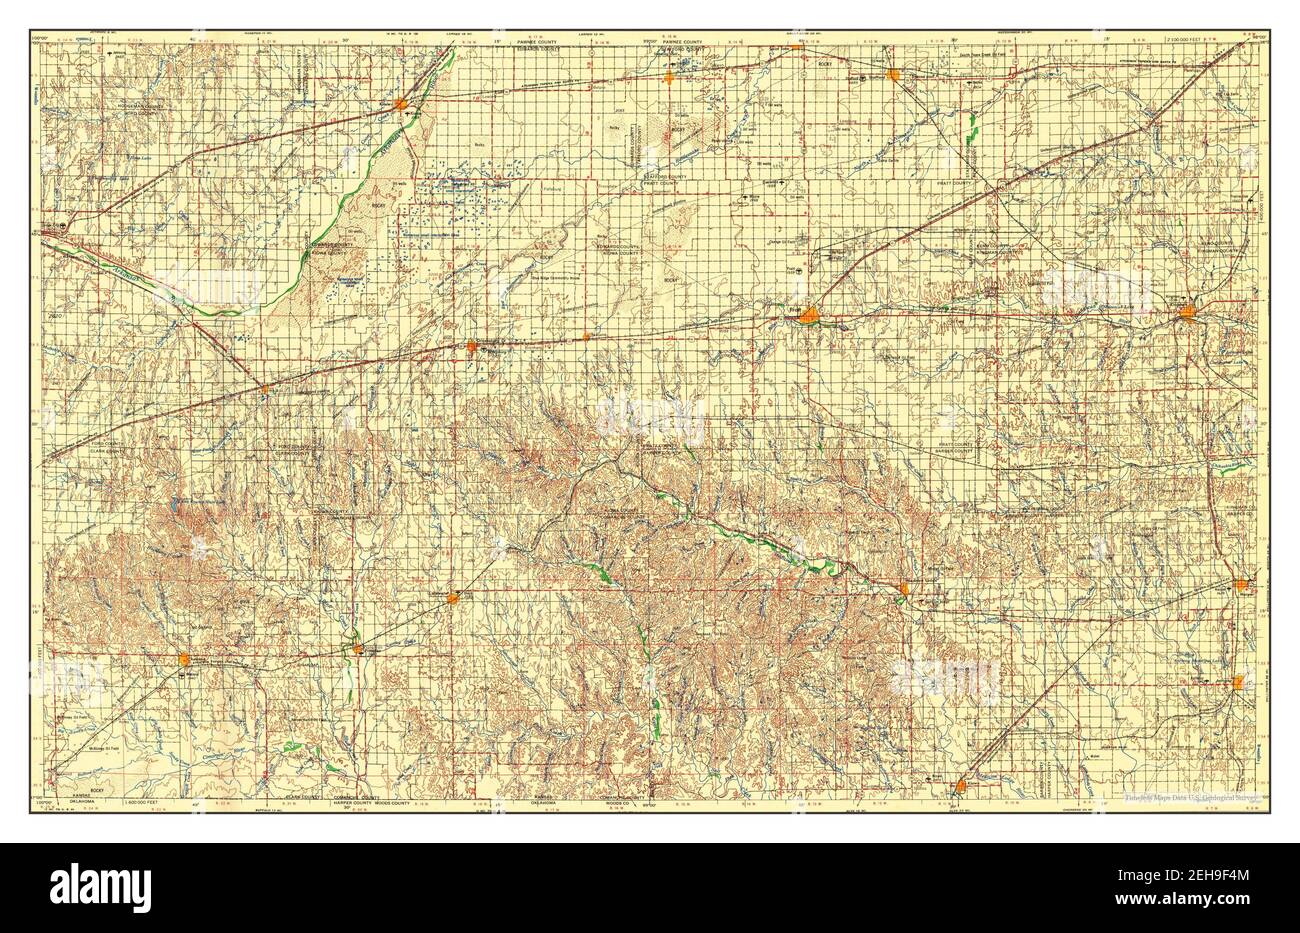 Pratt, Kansas, map 1959, 1:250000, United States of America by Timeless Maps, data U.S. Geological Survey Stock Photo